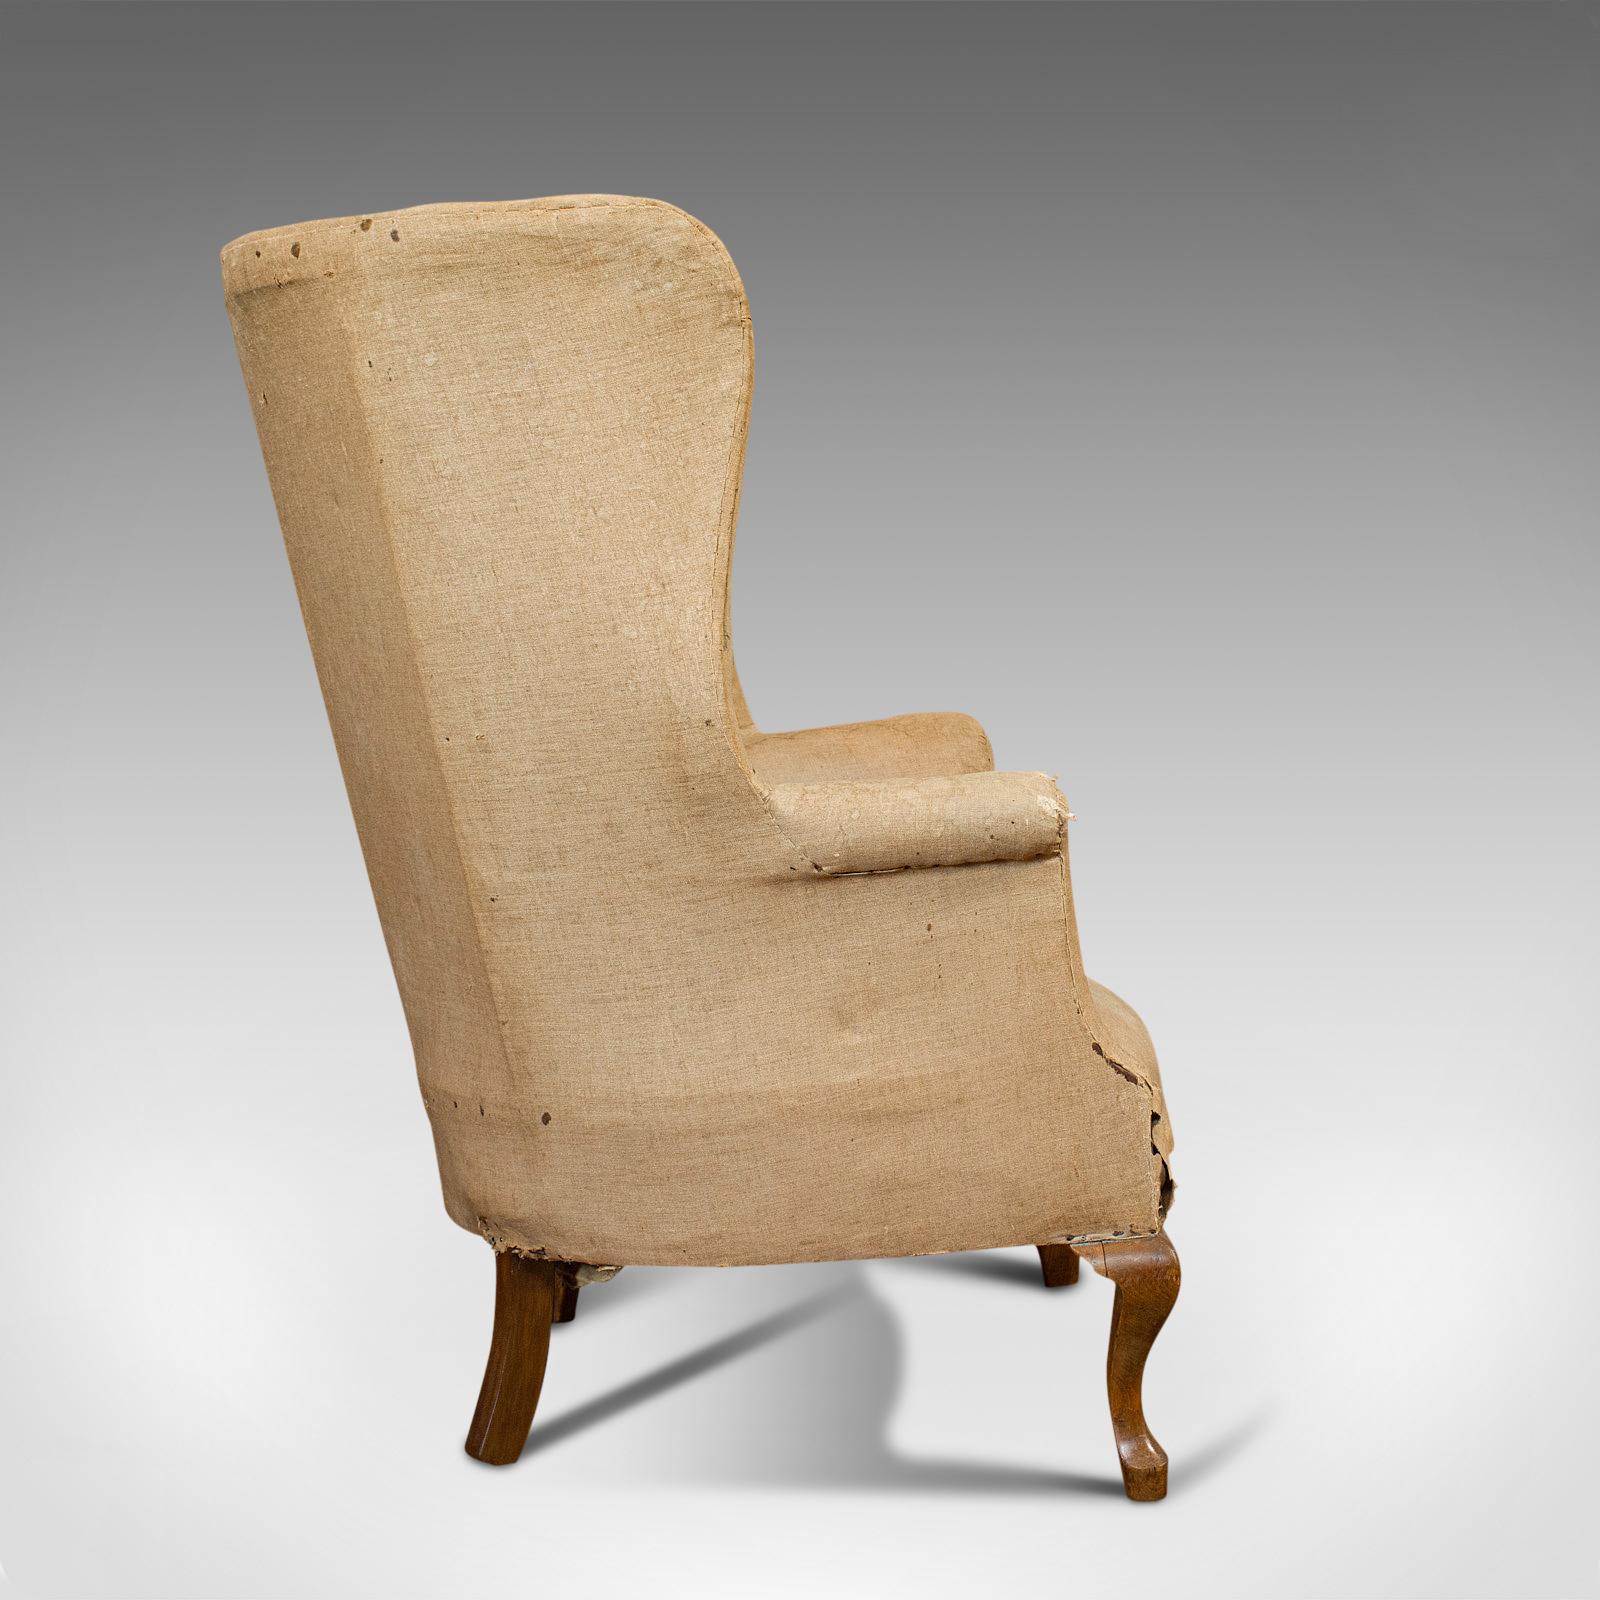 British Antique Wing Armchair, English, Barrel-Back, Seat, Chair, Victorian, circa 1900